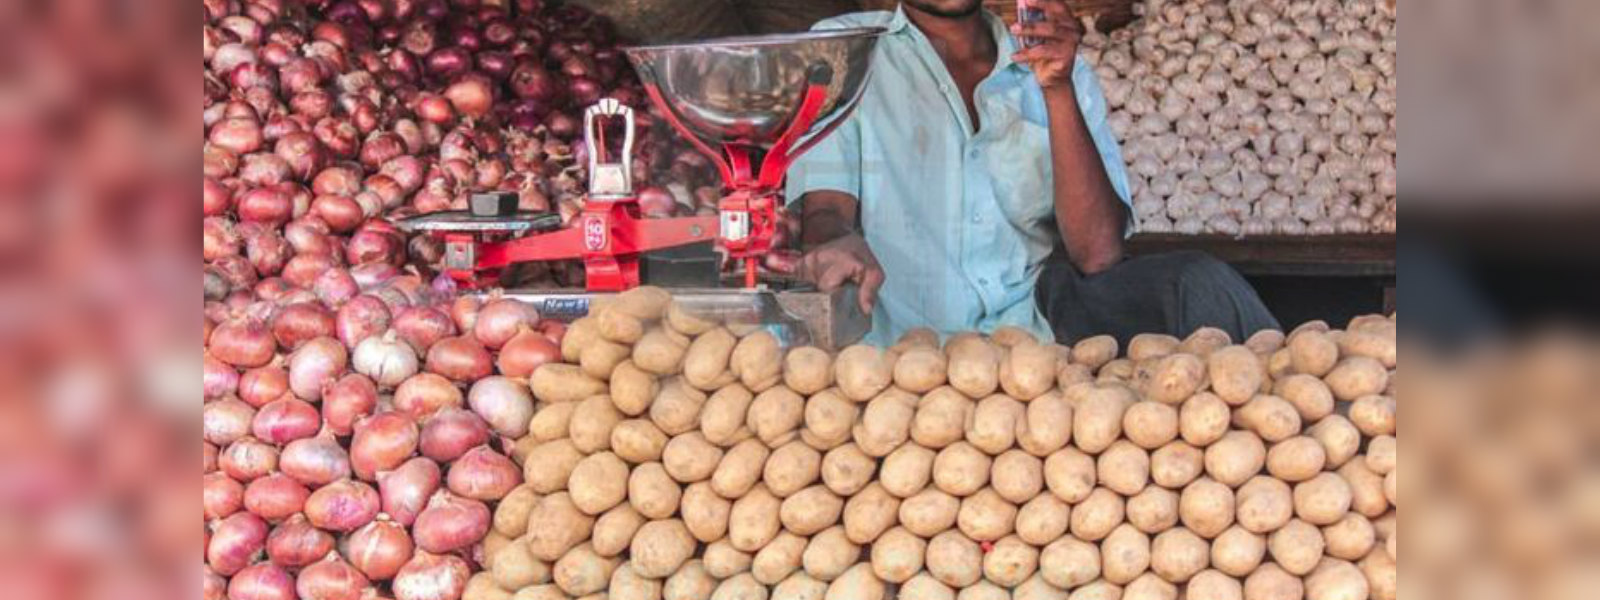 Rs. 40 import tax on Potatoe and Big onion